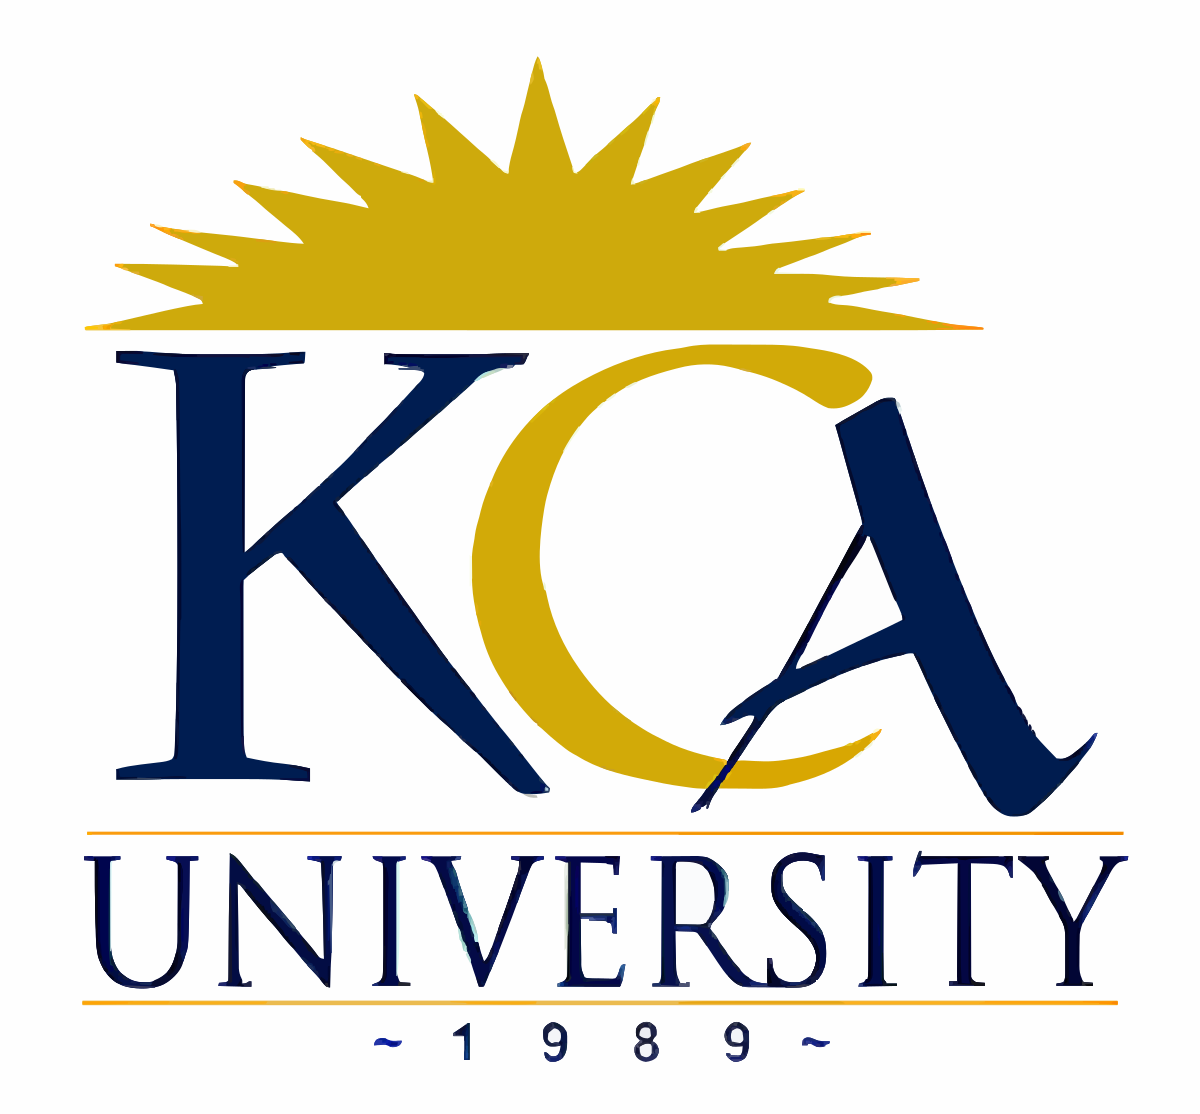 KCA University, Kenya College of Accountancy